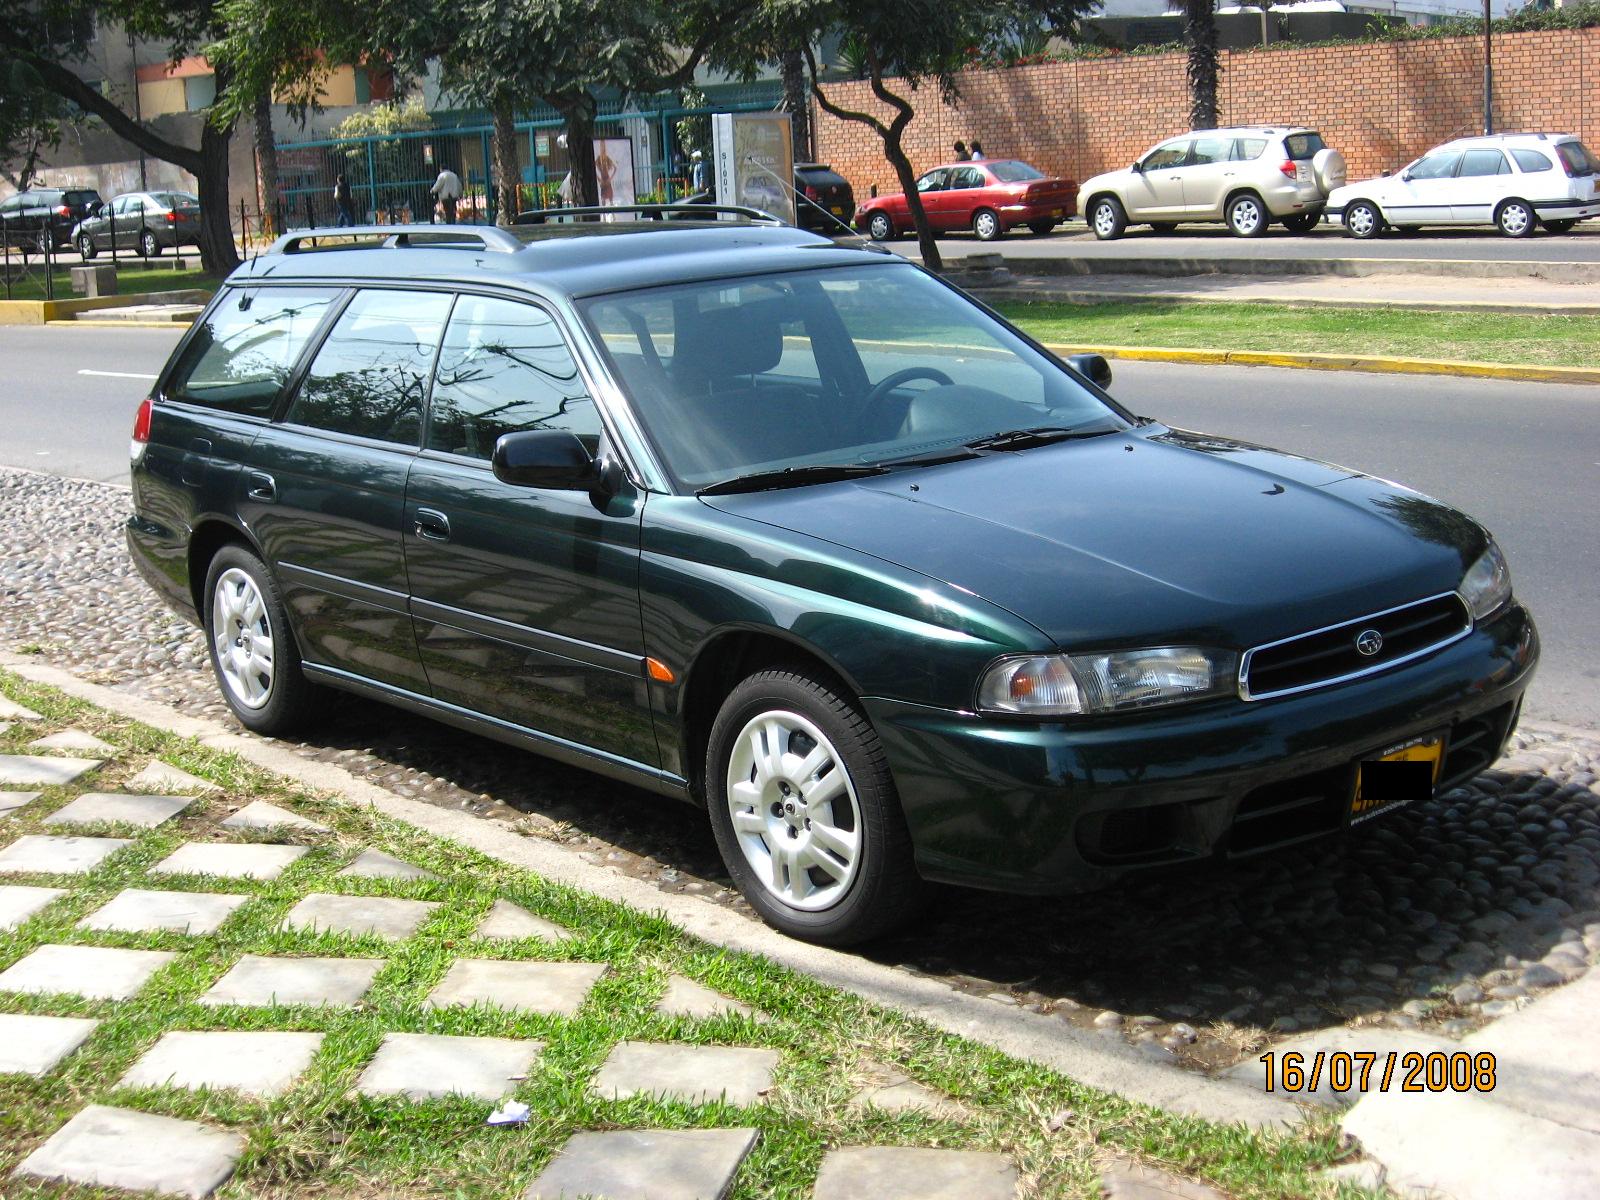 1998 Subaru Legacy Information and photos MOMENTcar